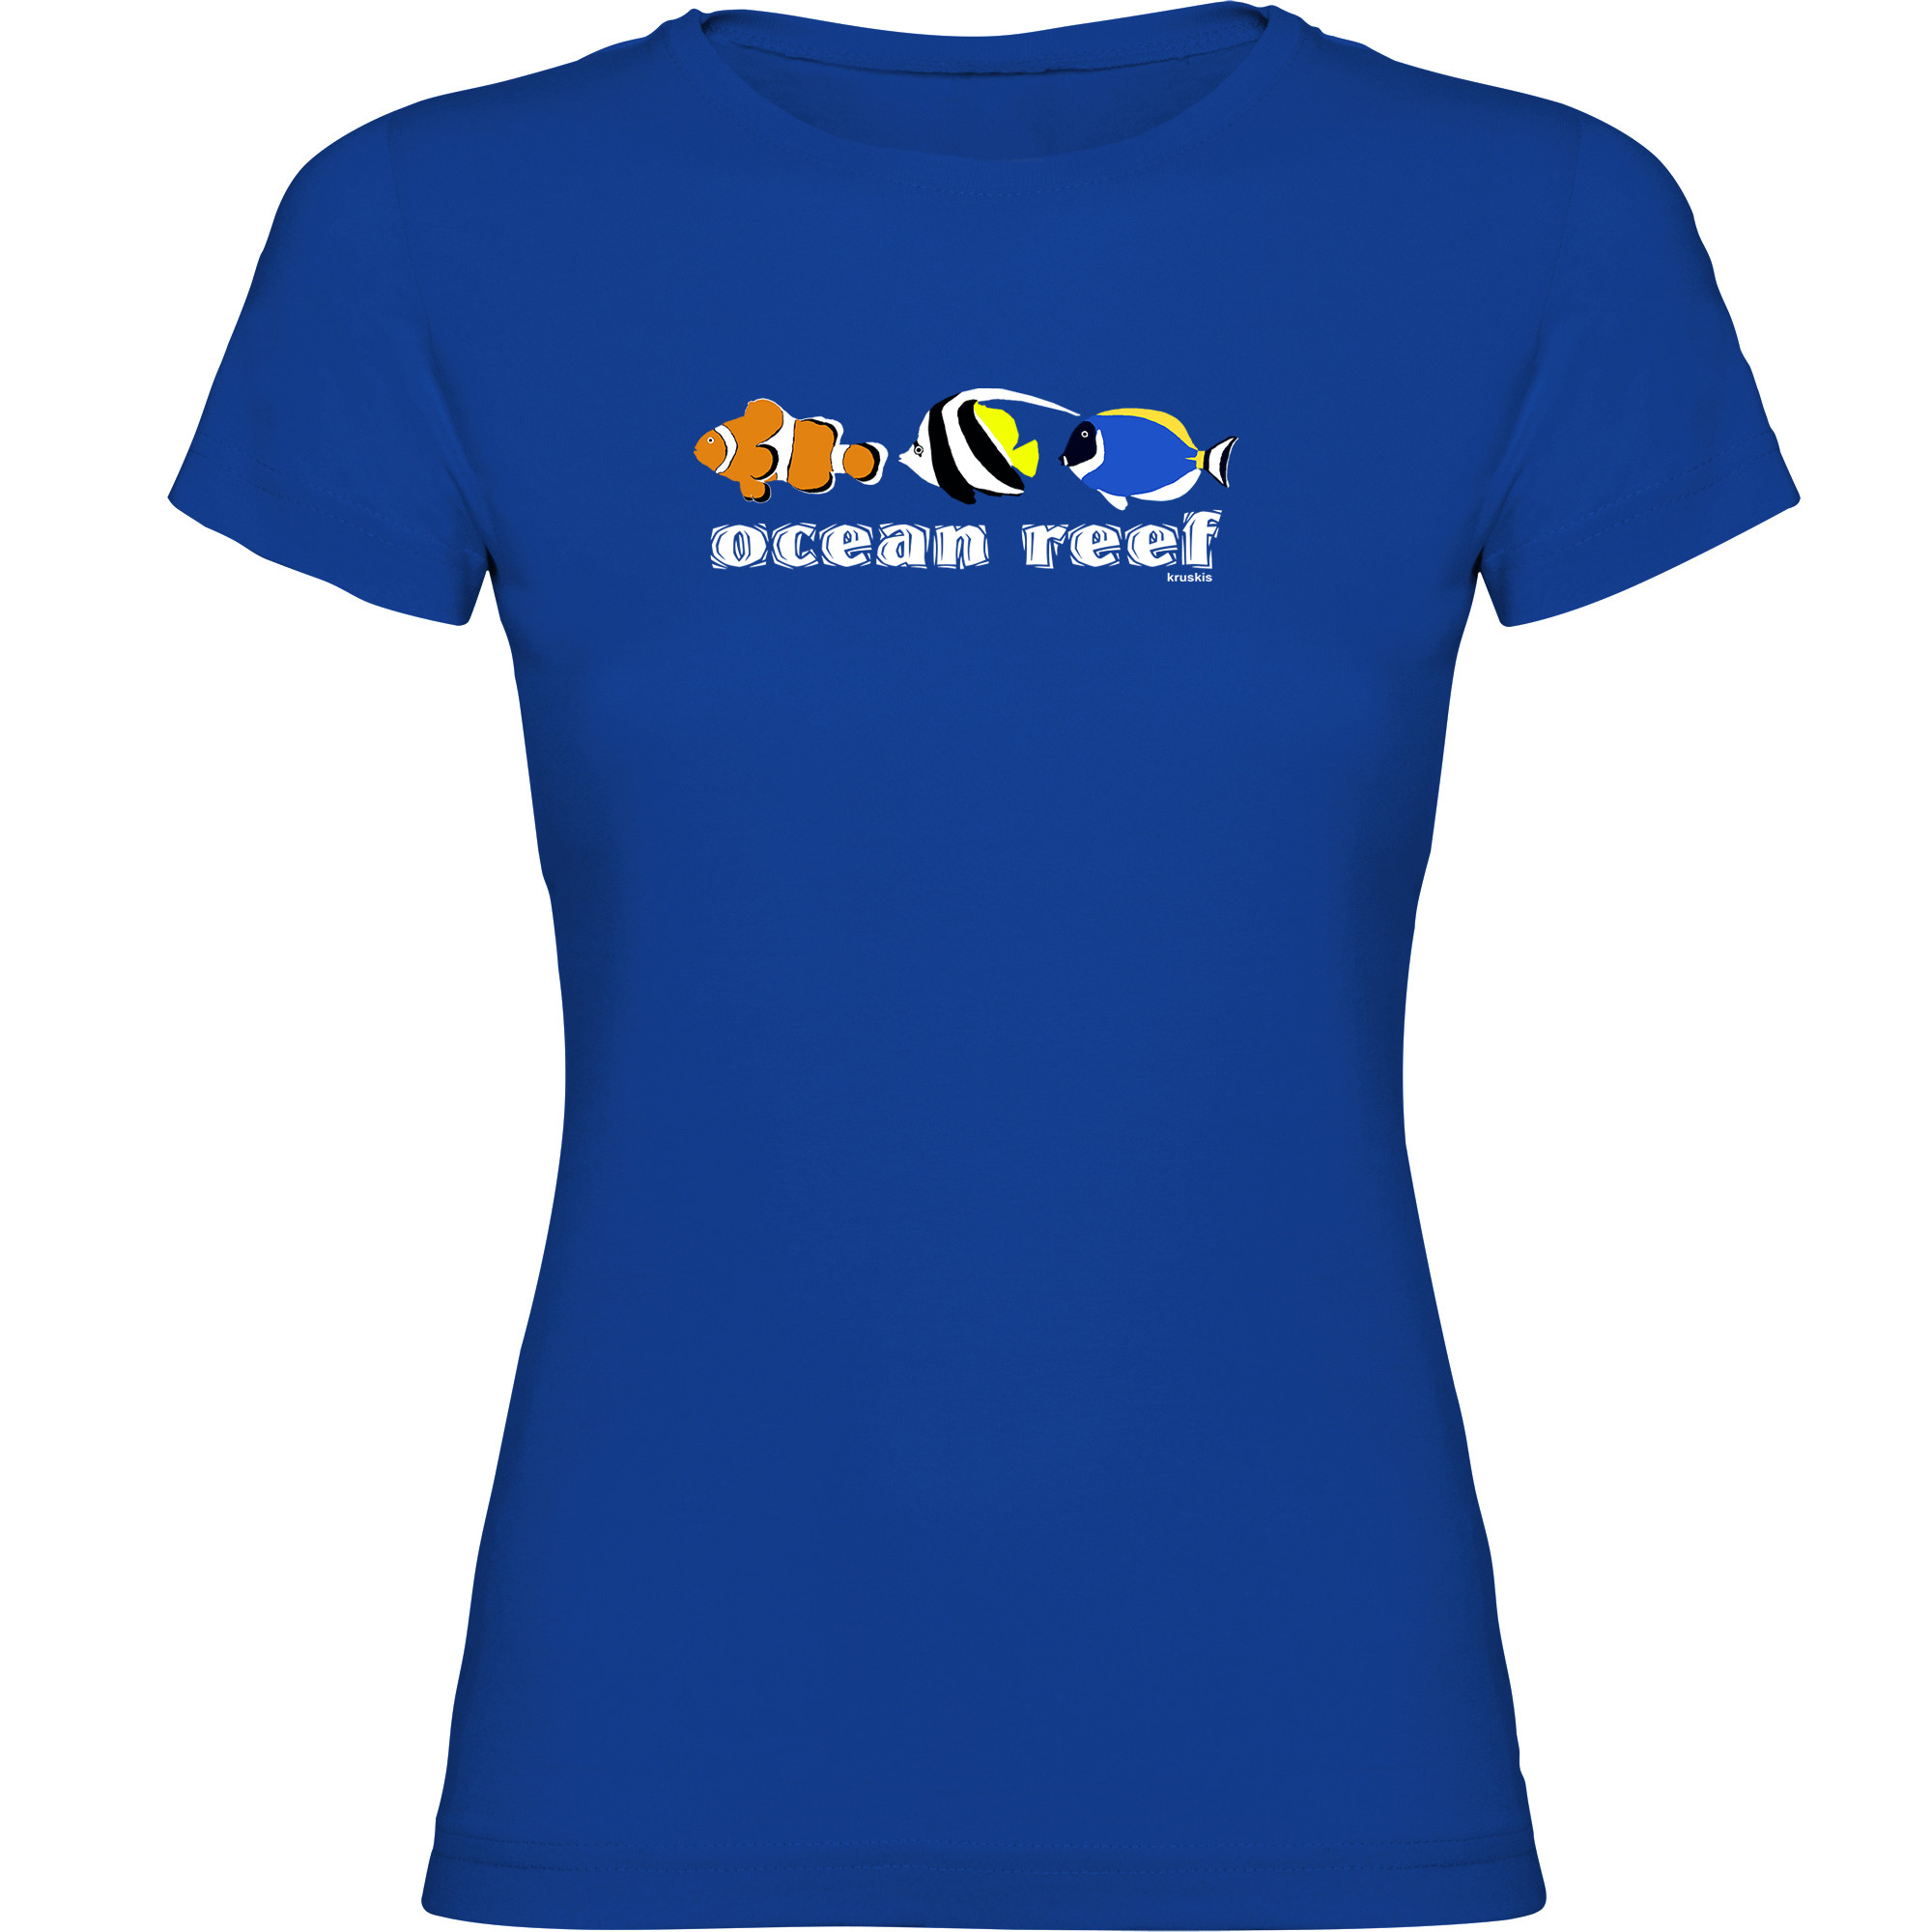 Camiseta Buceo Ocean Reef Manga Corta Mujer